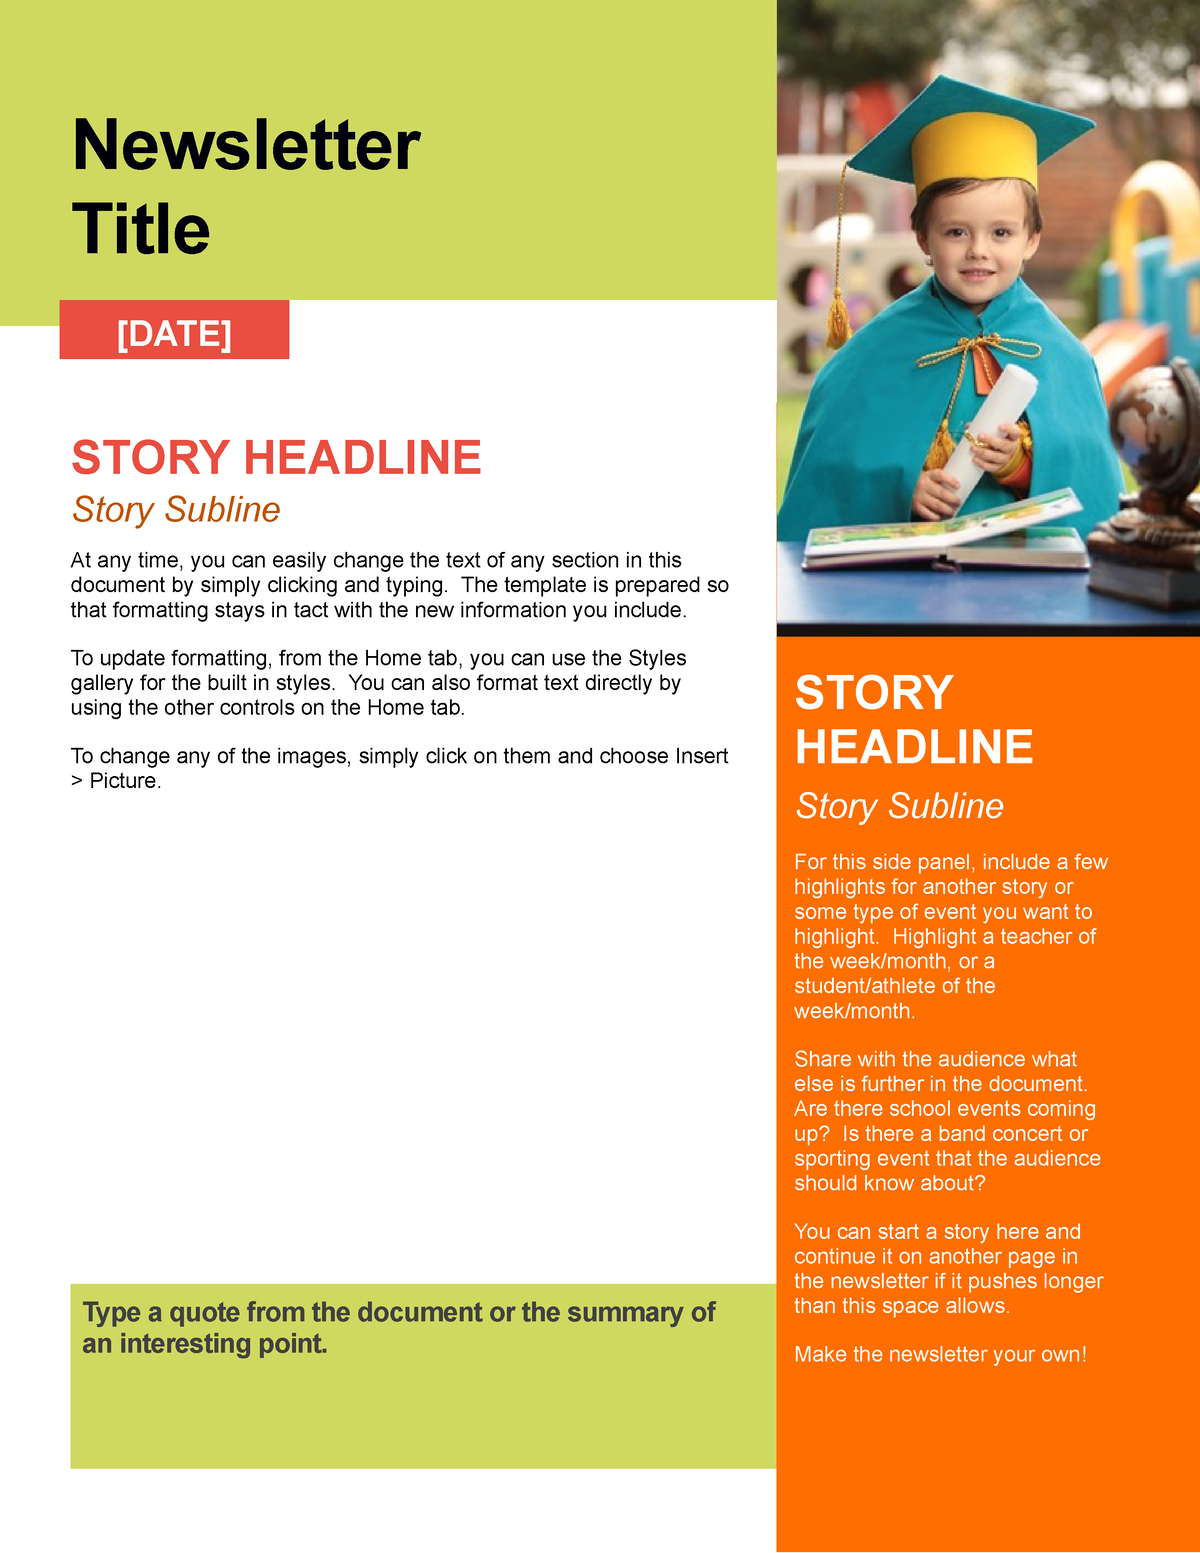 School newsletter Newsletter Title [DATE] STORY HEADLINE Story